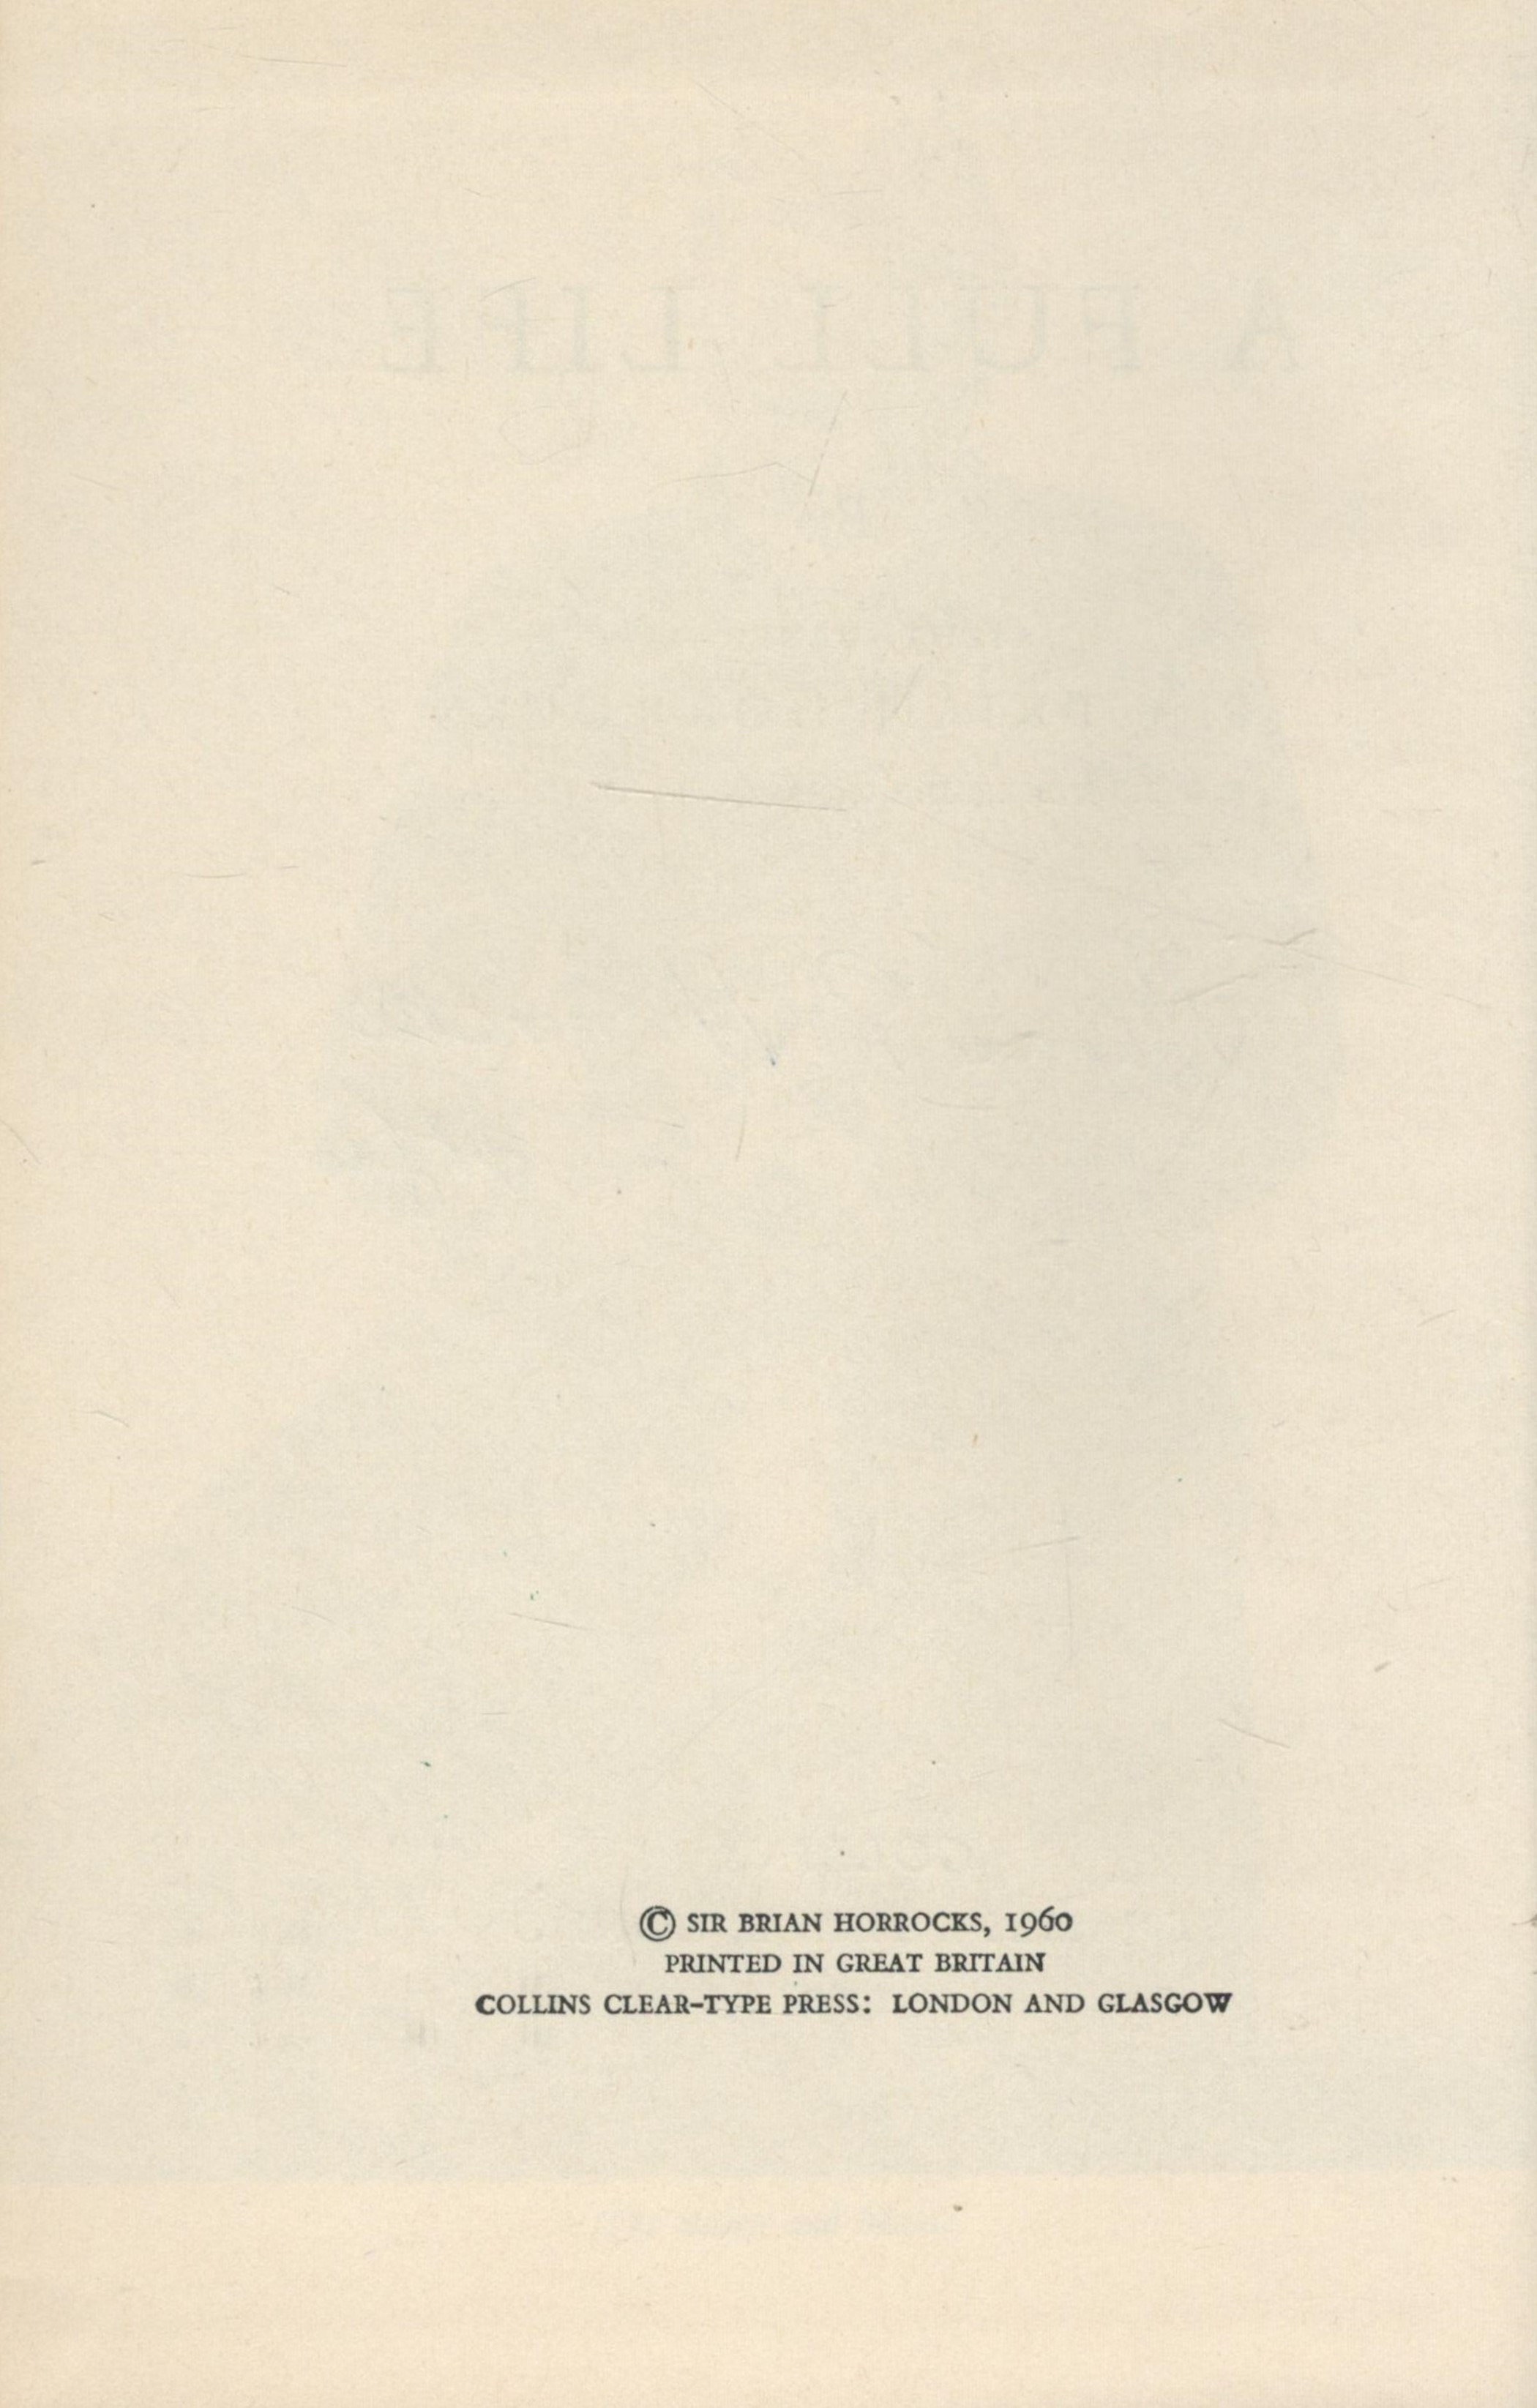 Lt Gen Sir Brian Horrocks Signed Book A Full Life by Lt Gen Sir Brian Horrocks 1960 First Edition - Image 3 of 3